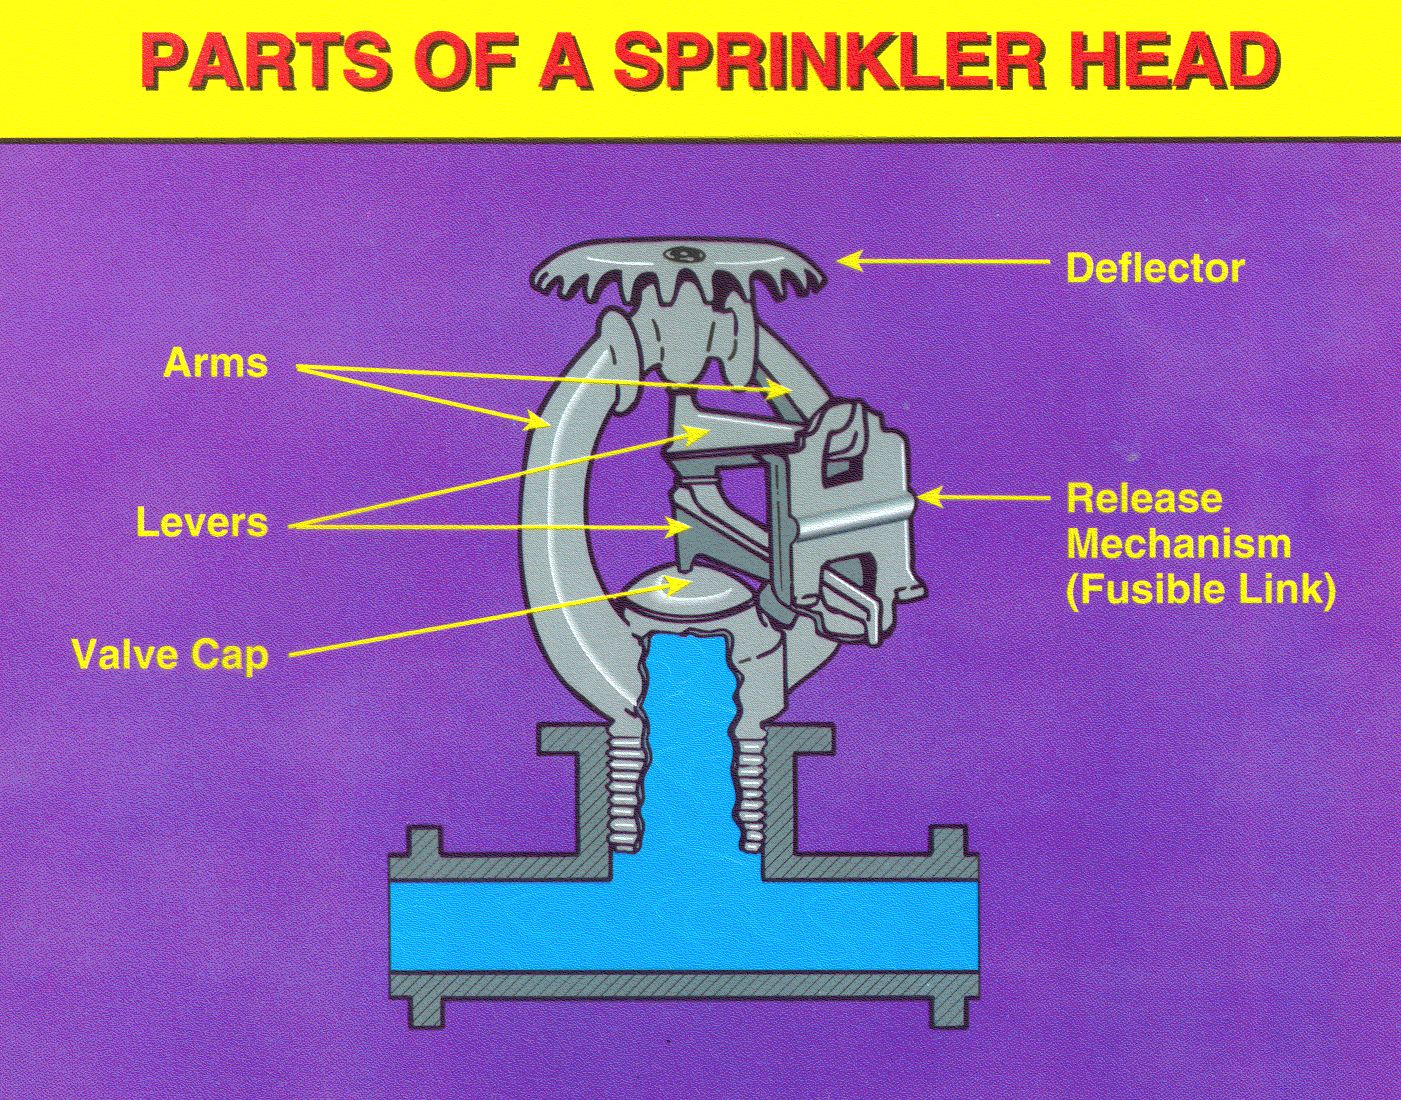 Parts of a Sprinkler Head